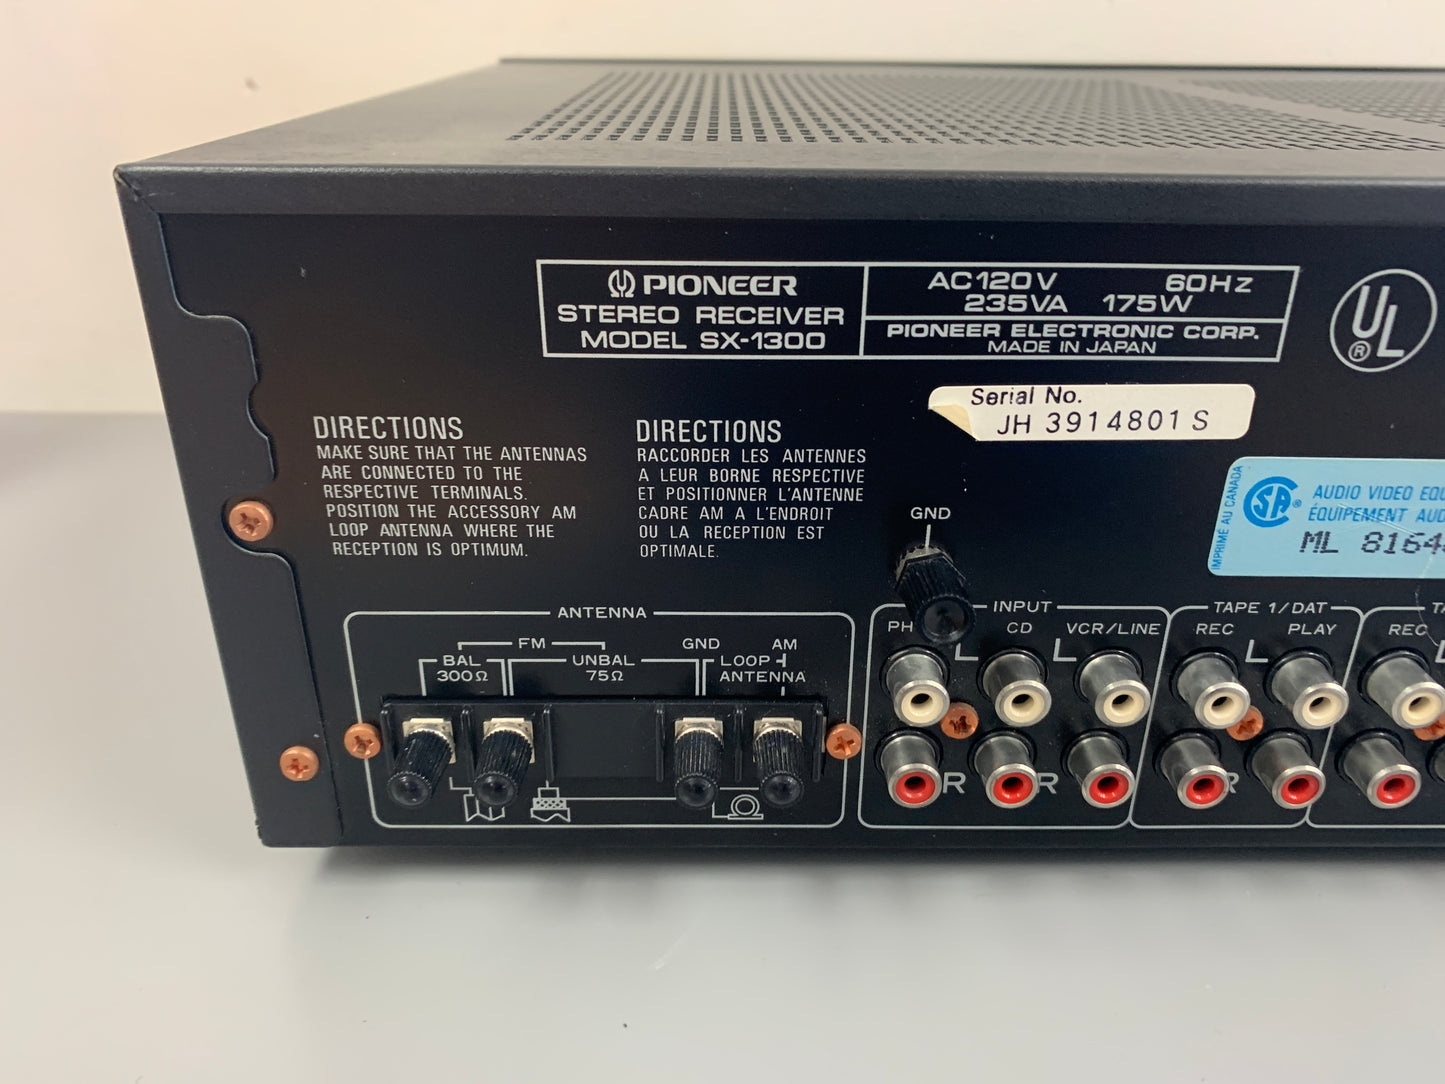 Pioneer SX-1300 Stereo Seceiver  * 1988 * 40W